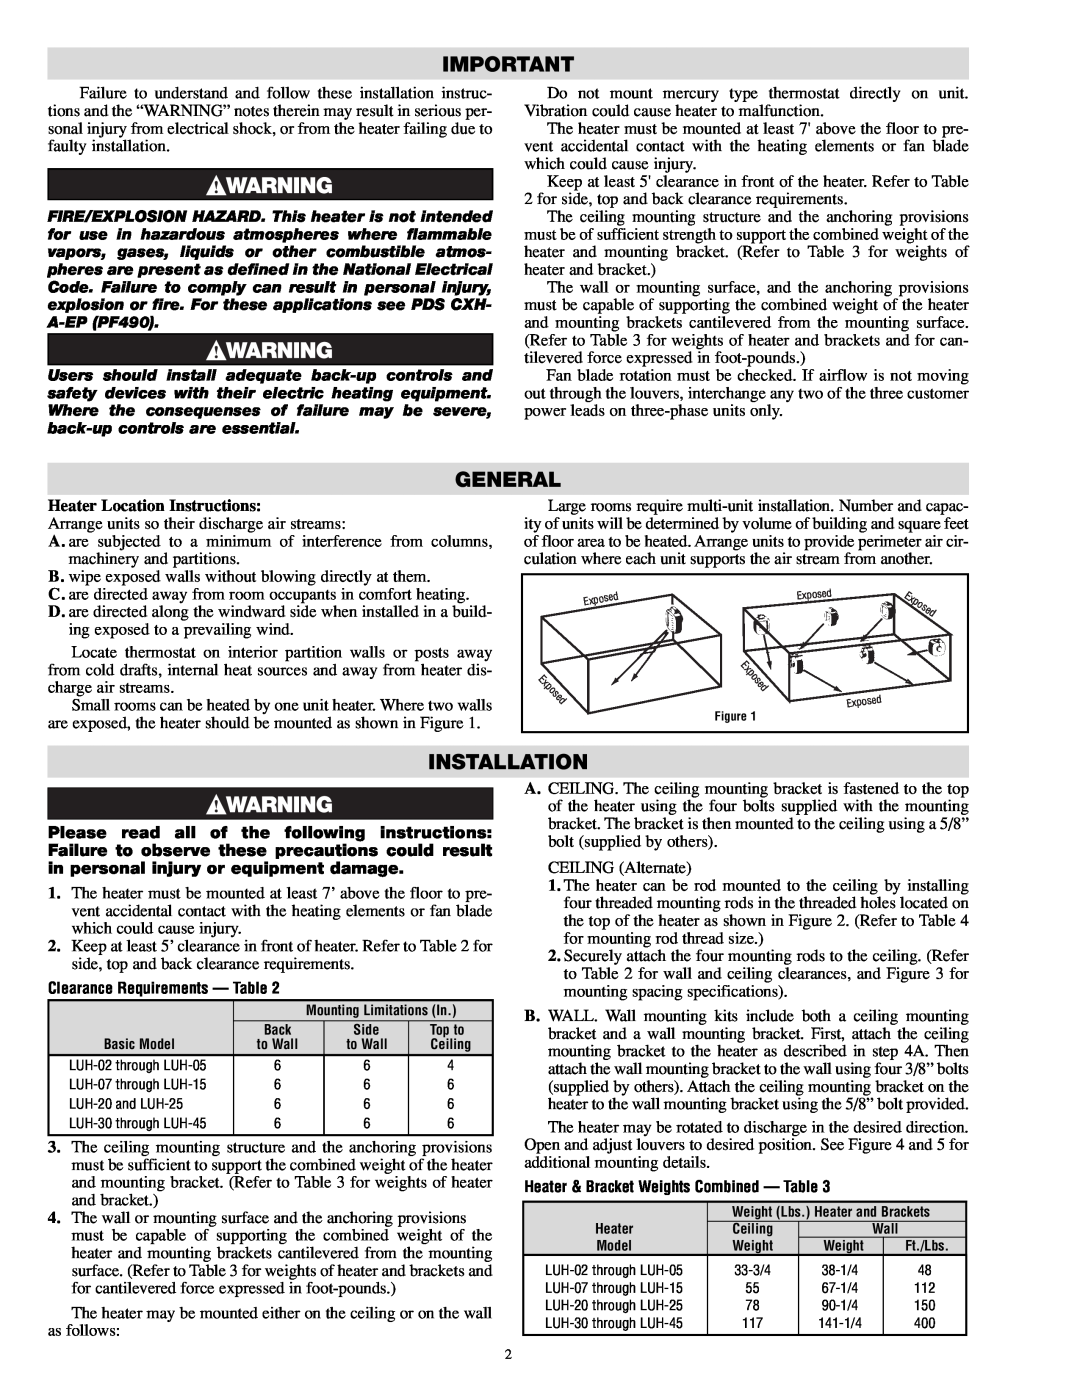 Chromalox PF479-6 dimensions General, Installation, Heater Location Instructions 